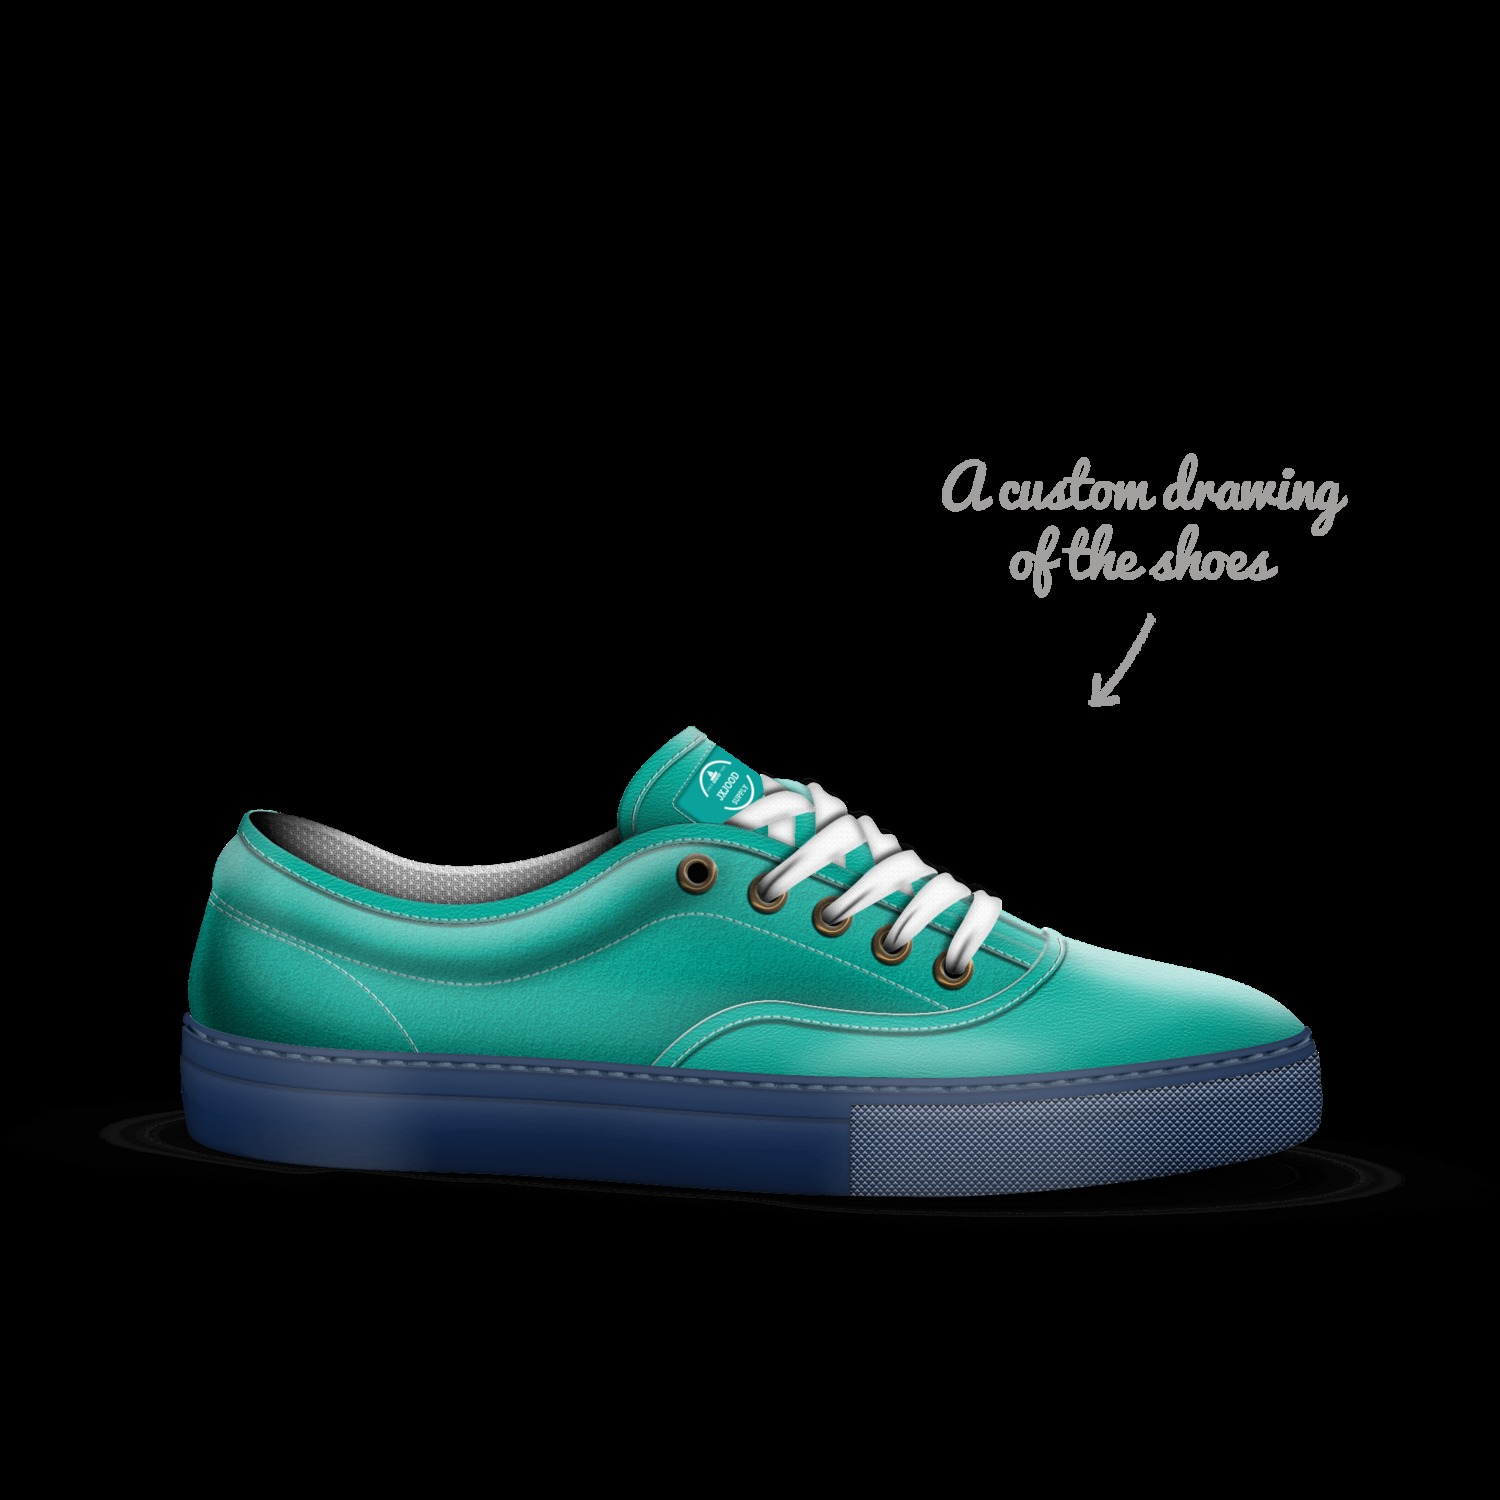 Jd | A Custom Shoe concept by Jojo